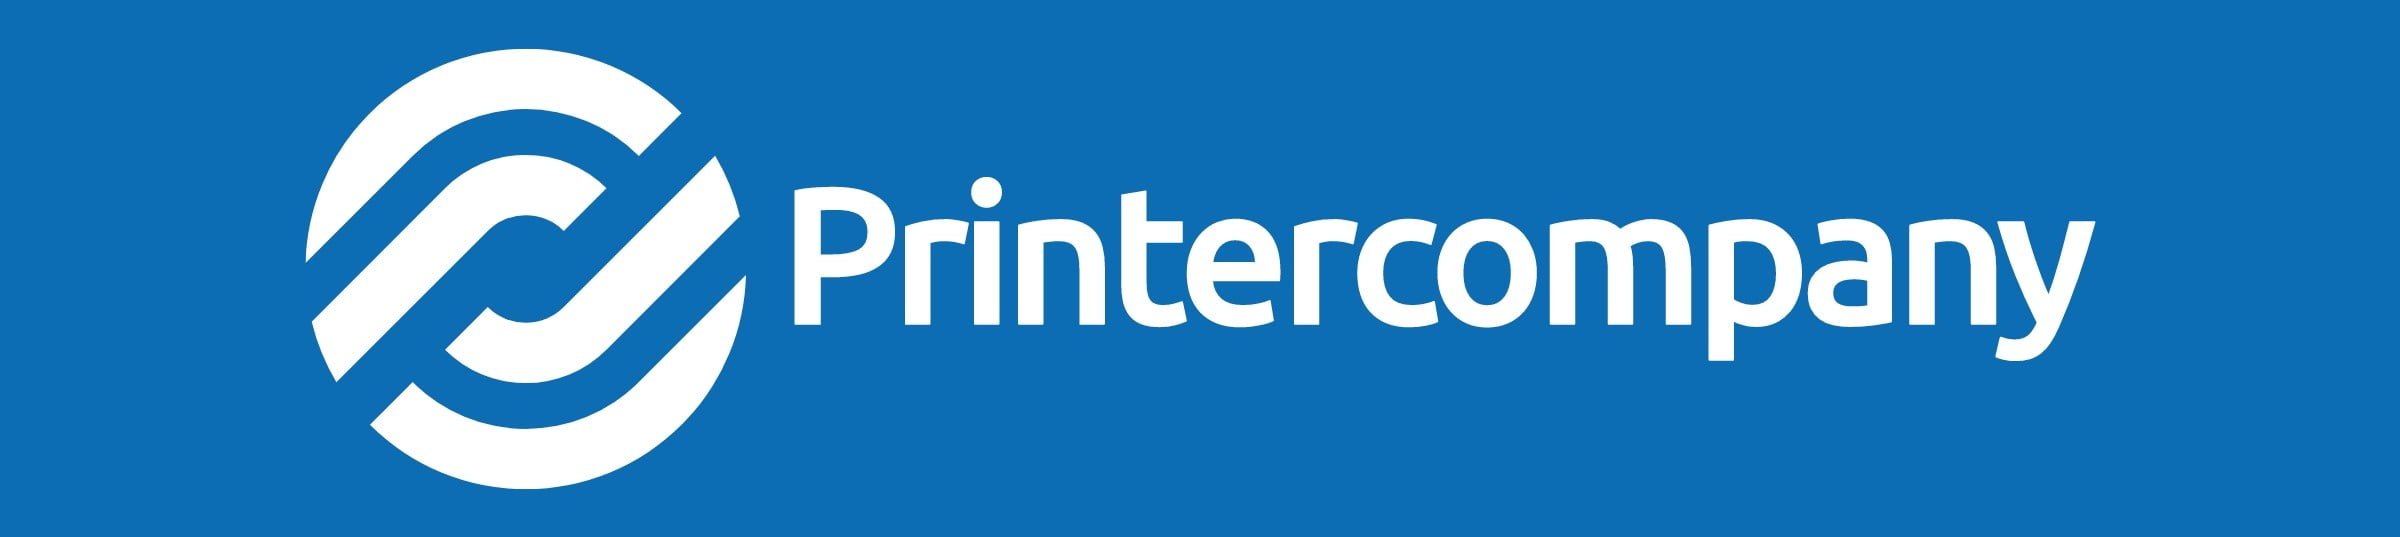 Printer company logo